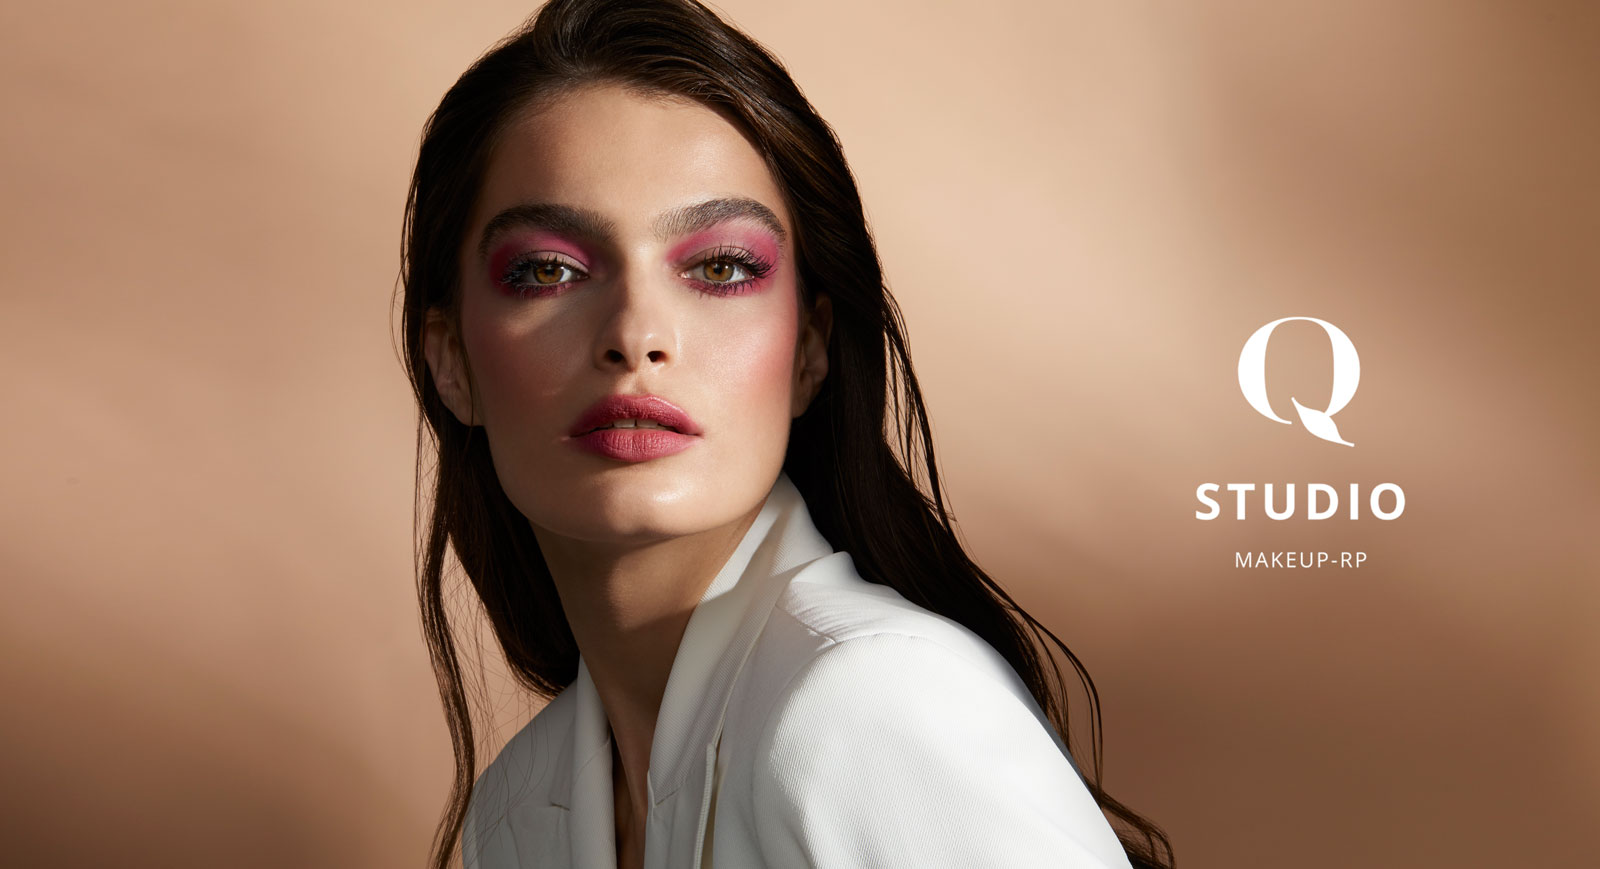 Q-STUDIO Cosmetics beauty photography ad campaign